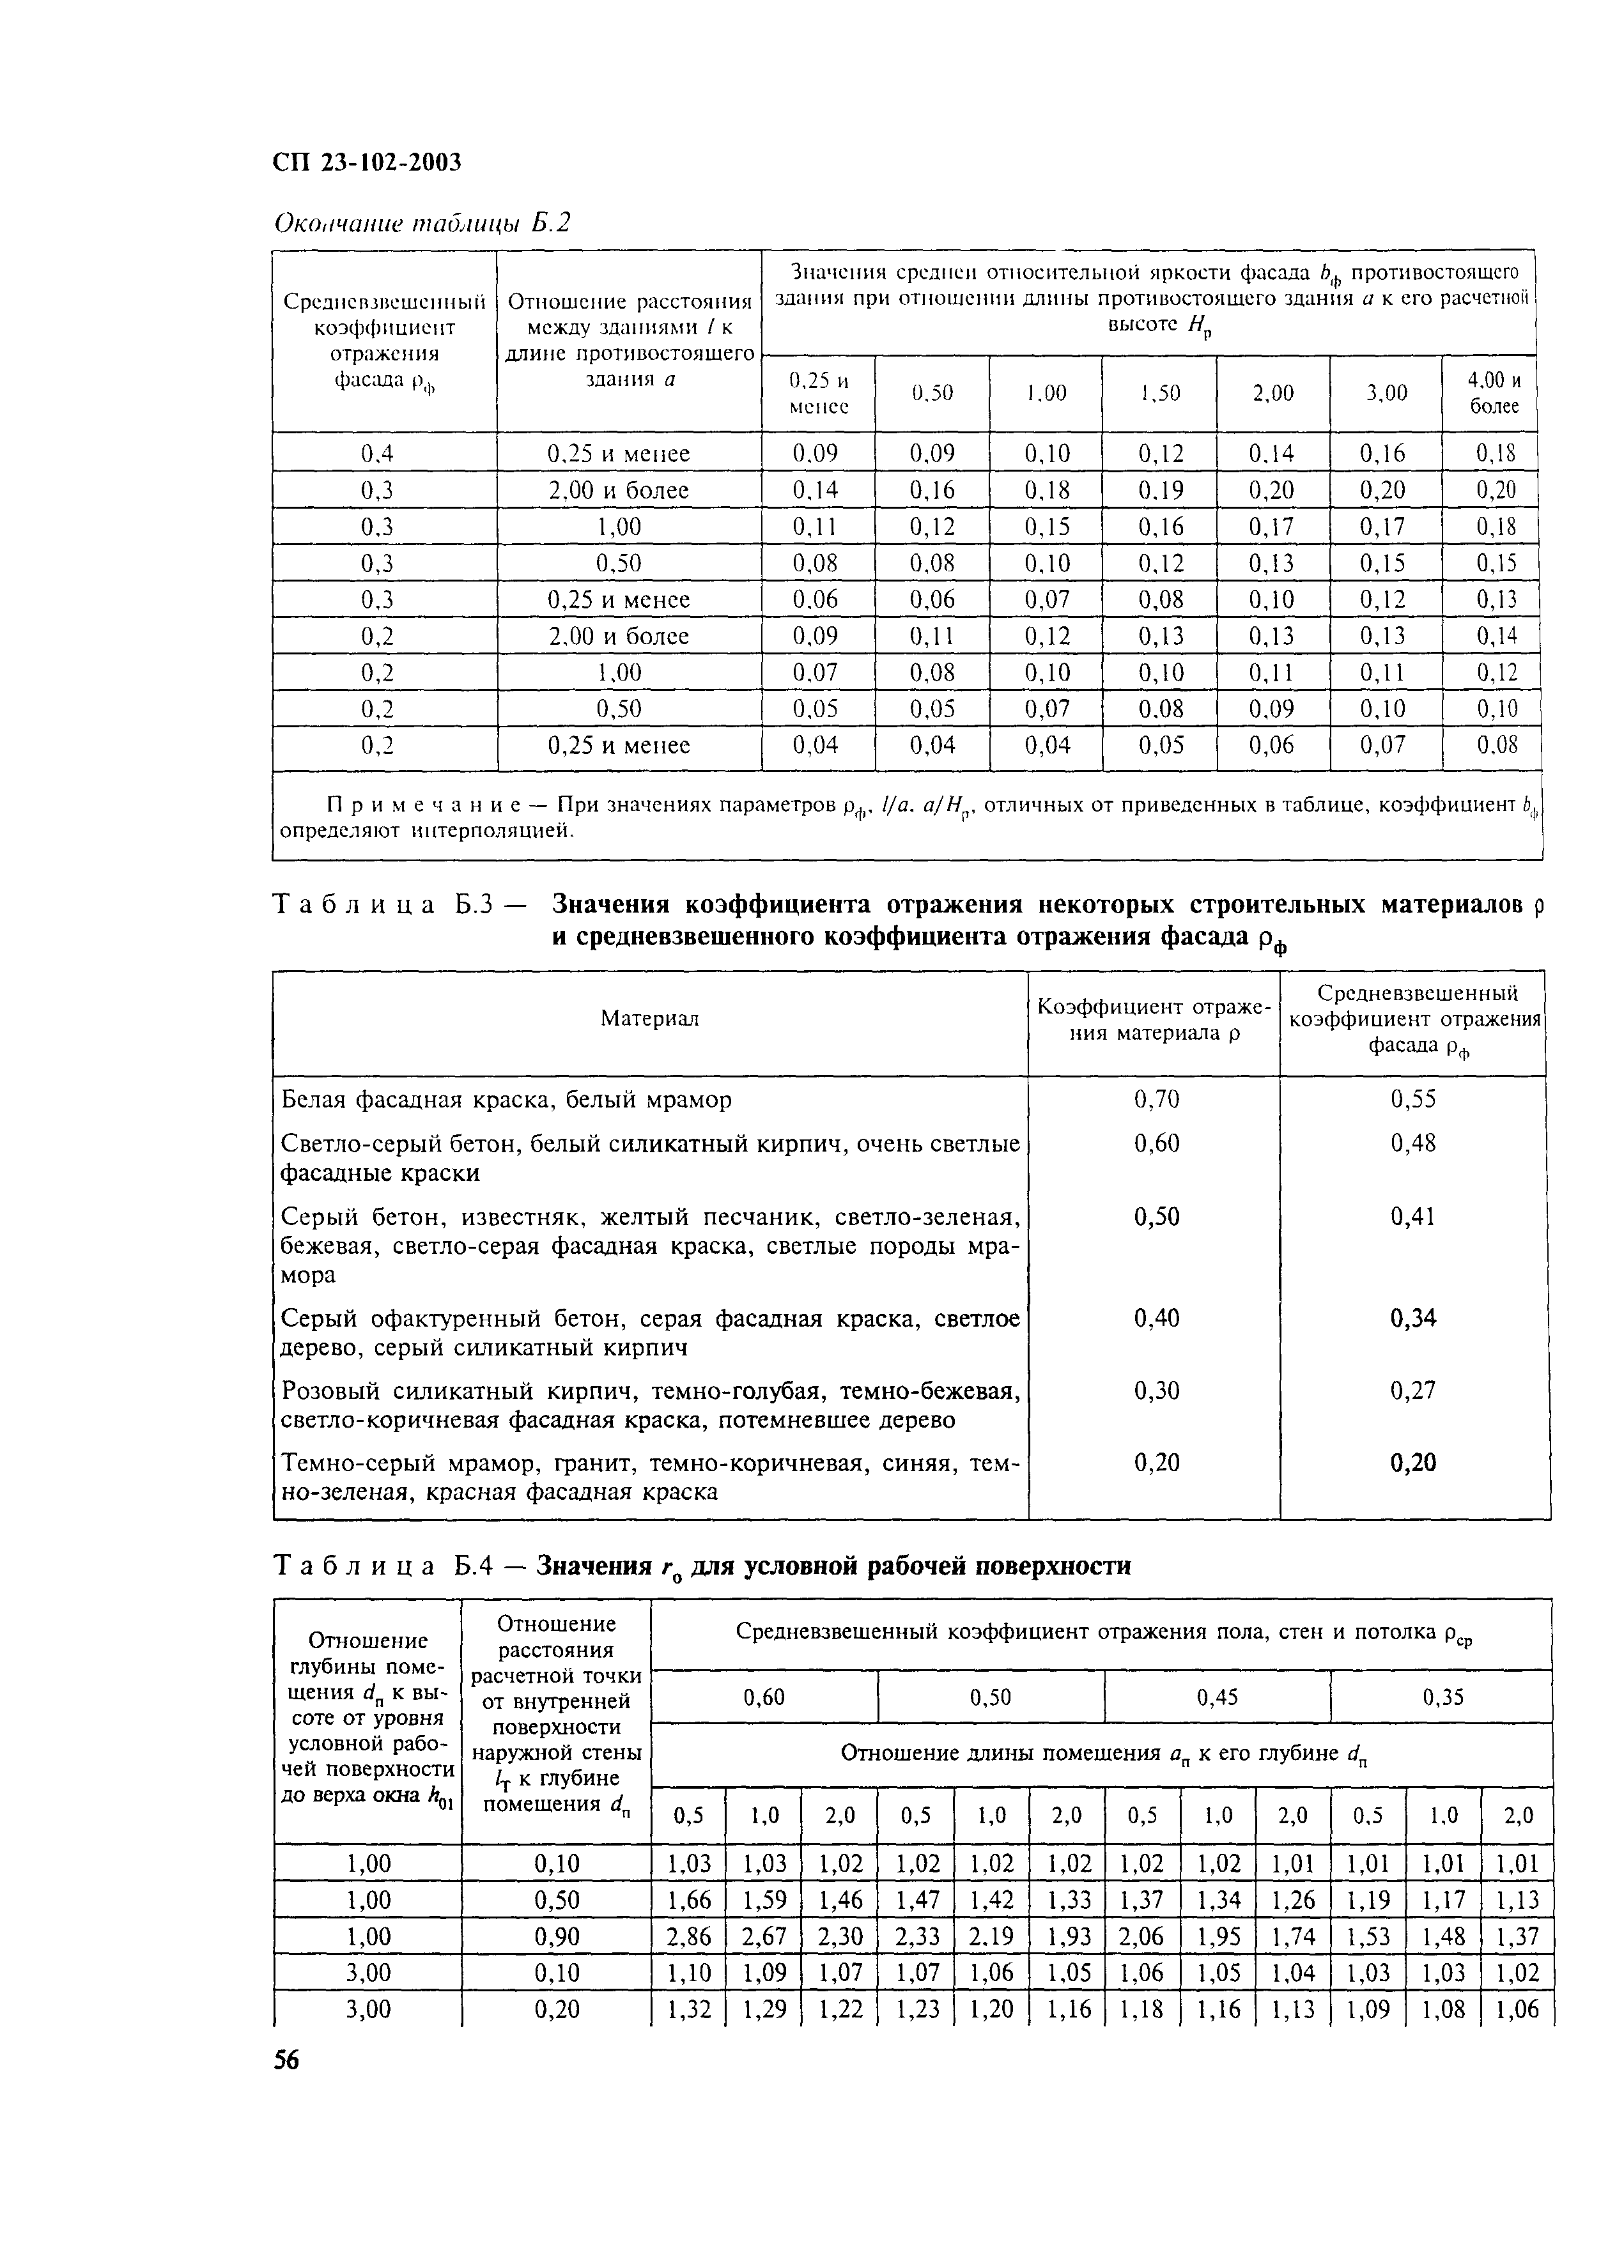 СП 23-102-2003, таблица б8